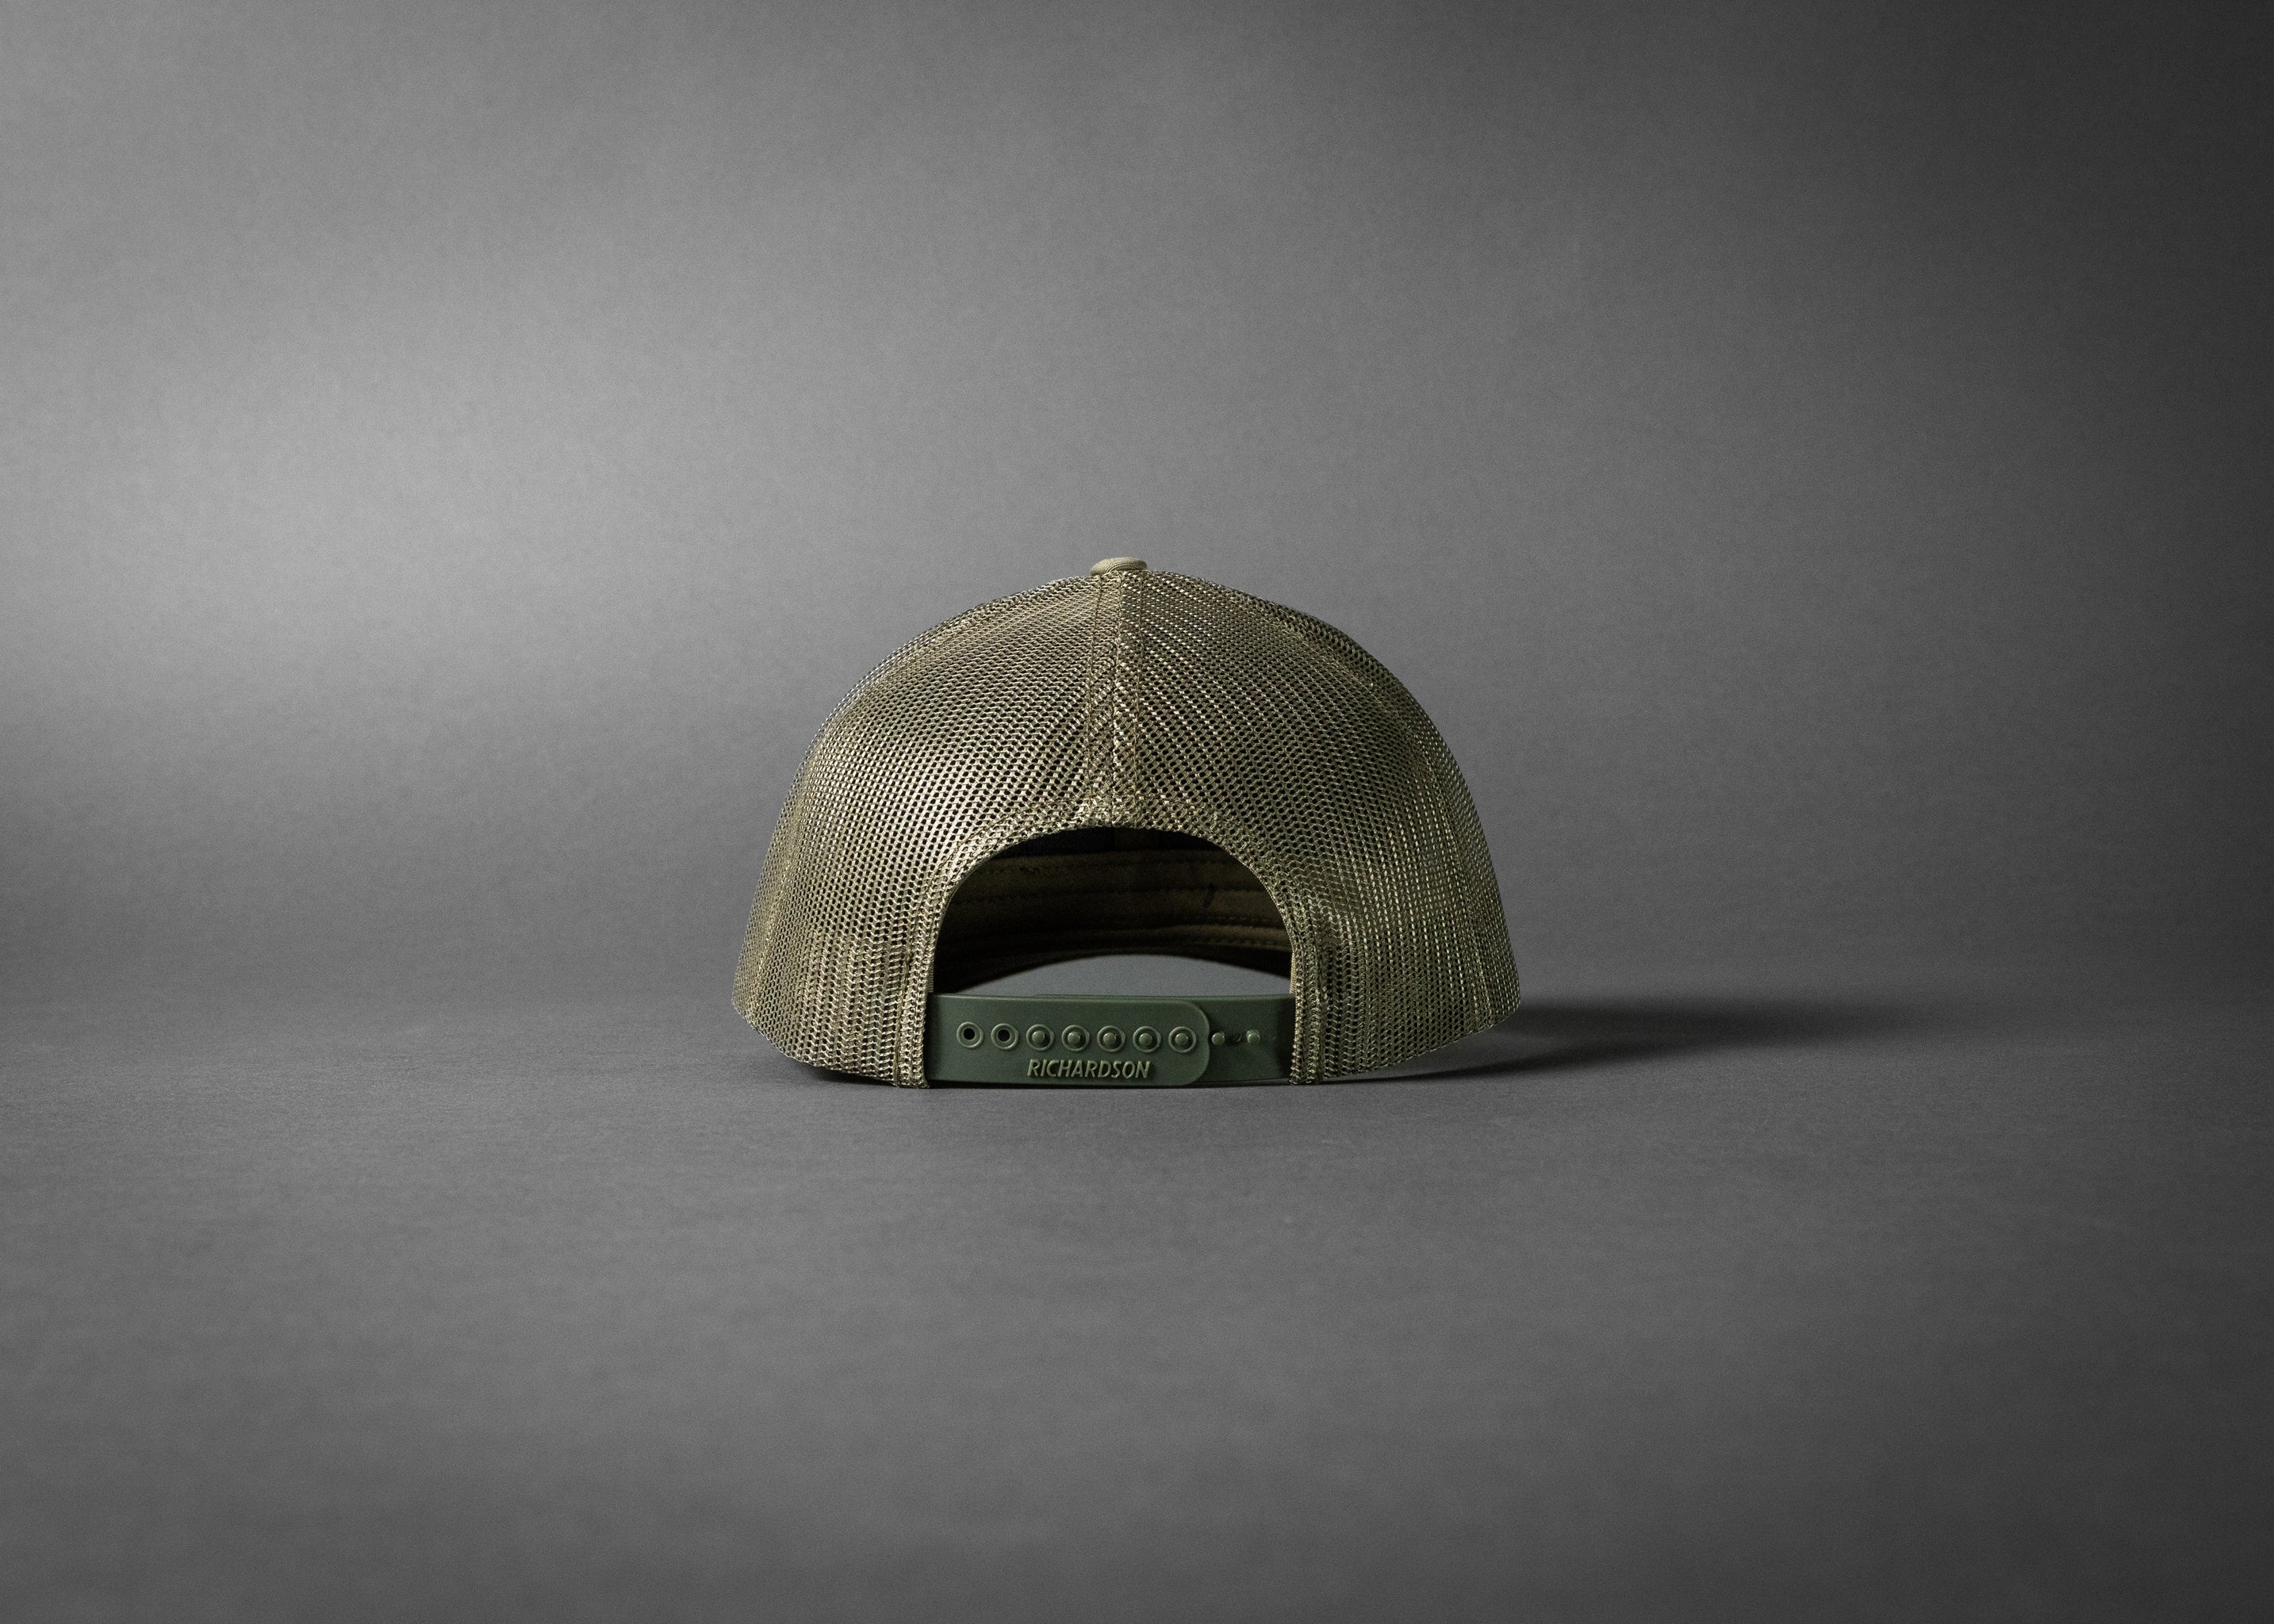 WIDOWMAKER (Loden Green Premium Trucker Hat)